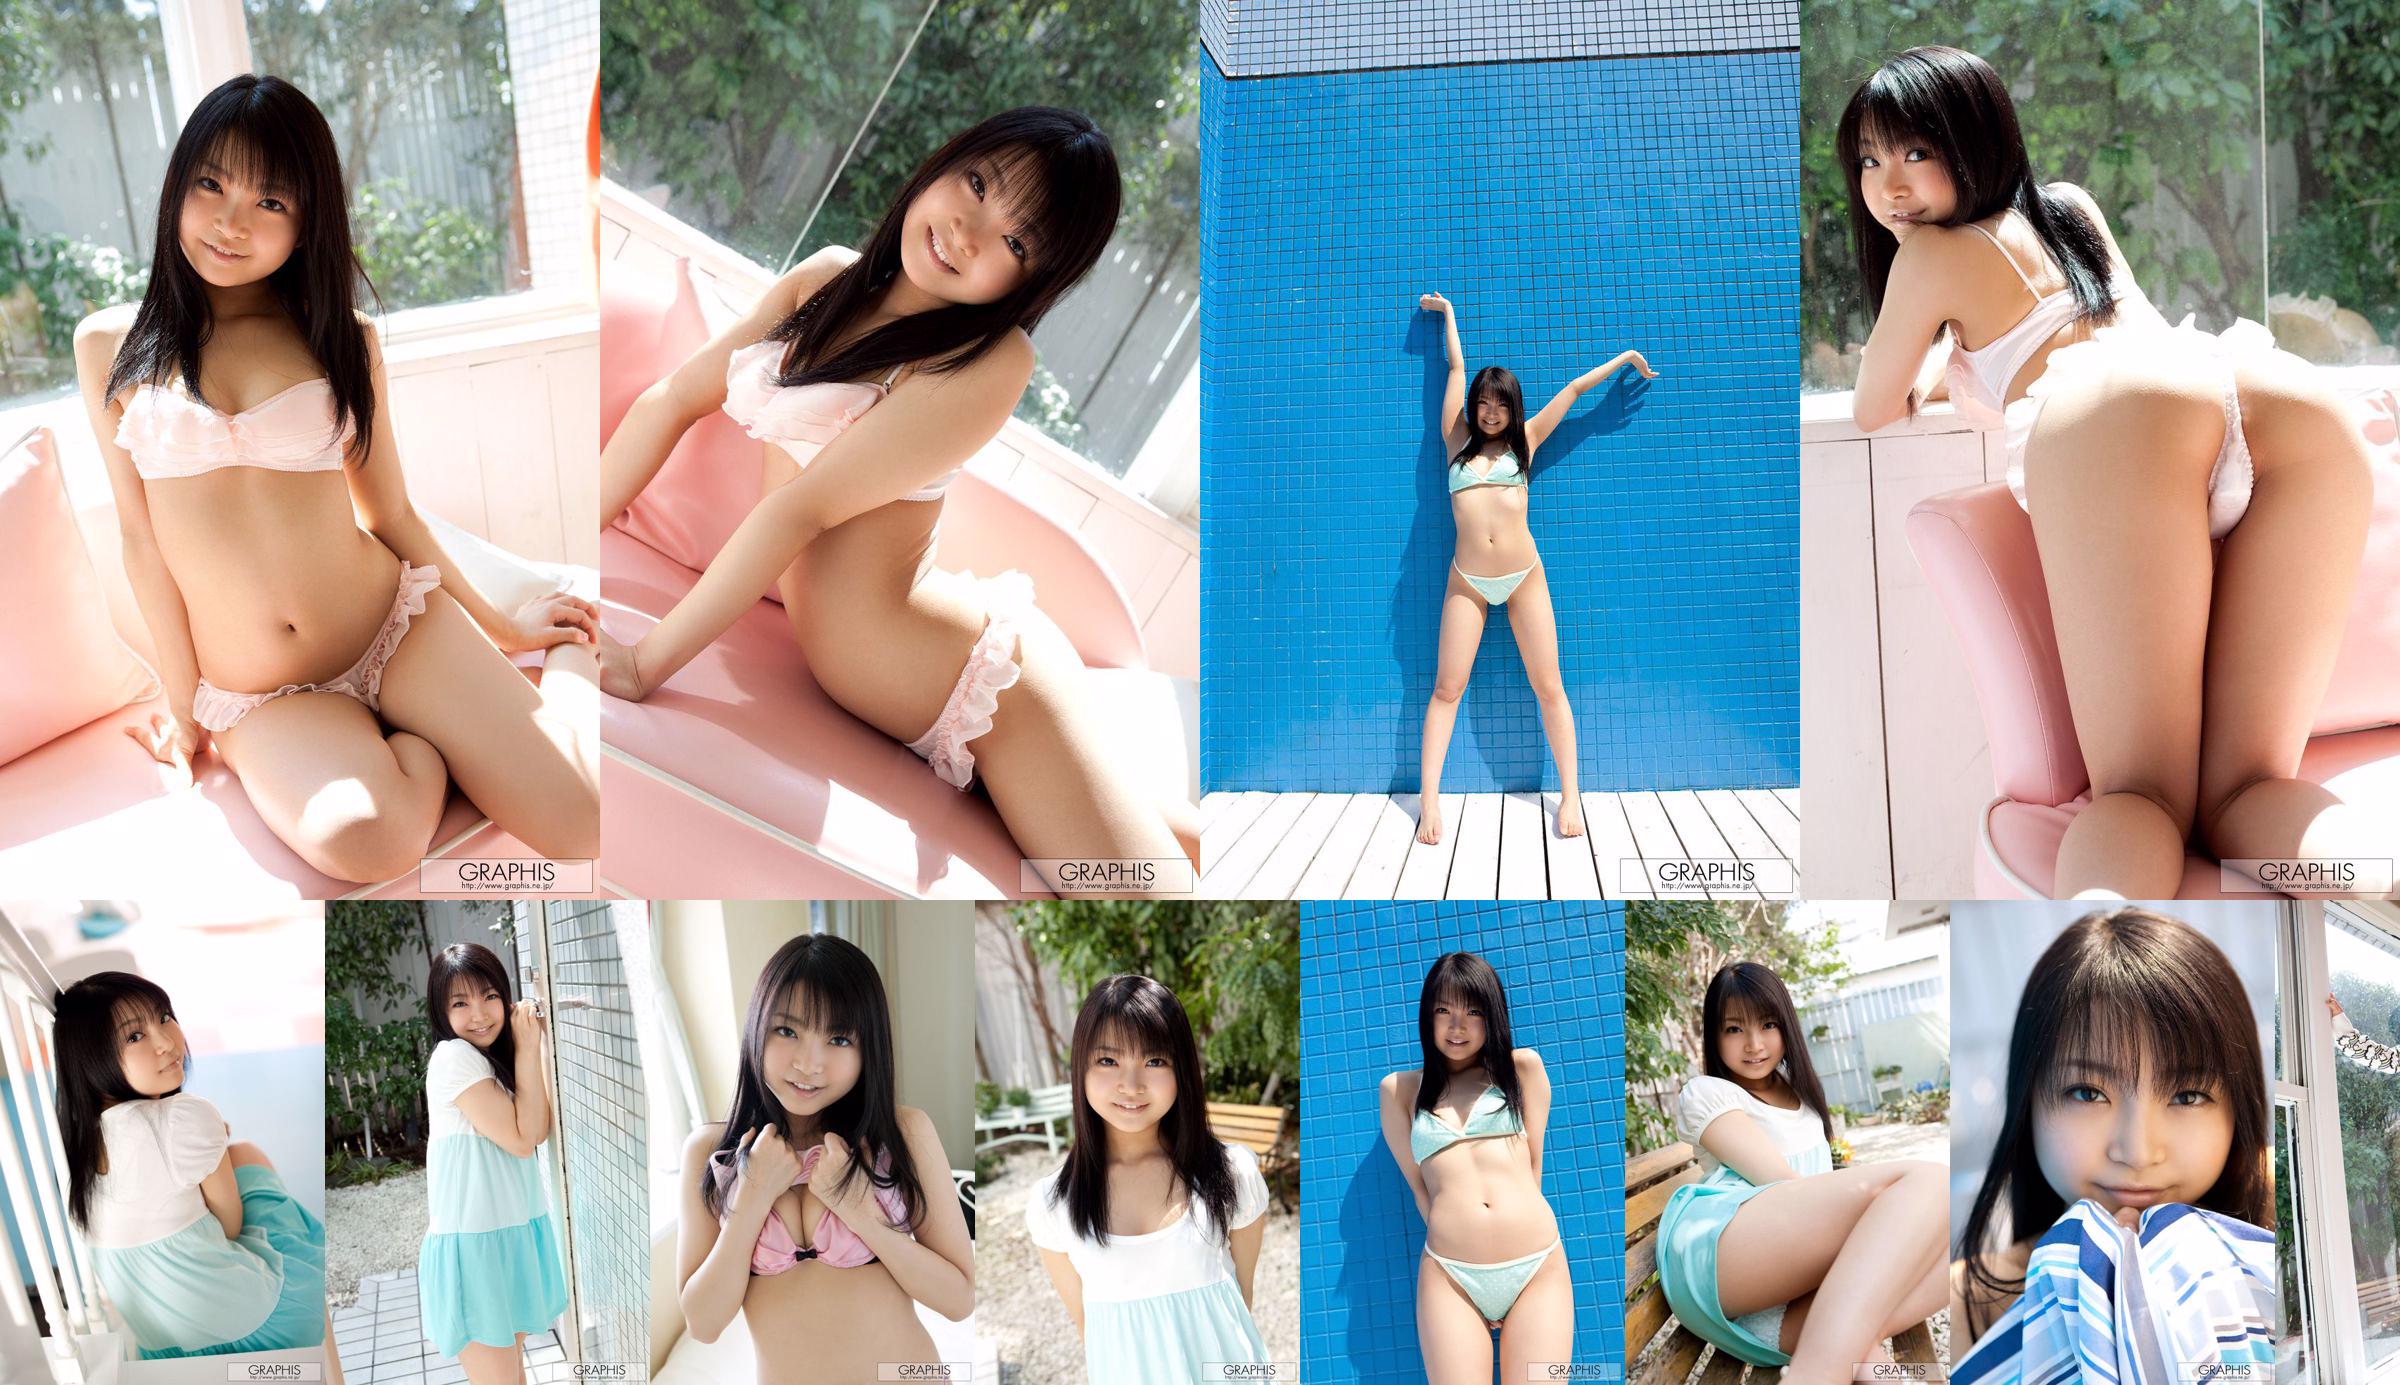 Chihiro Aoi / Chihiro Aoi [Graphis] Primera fotograbado Primera hija No.5844d1 Página 1